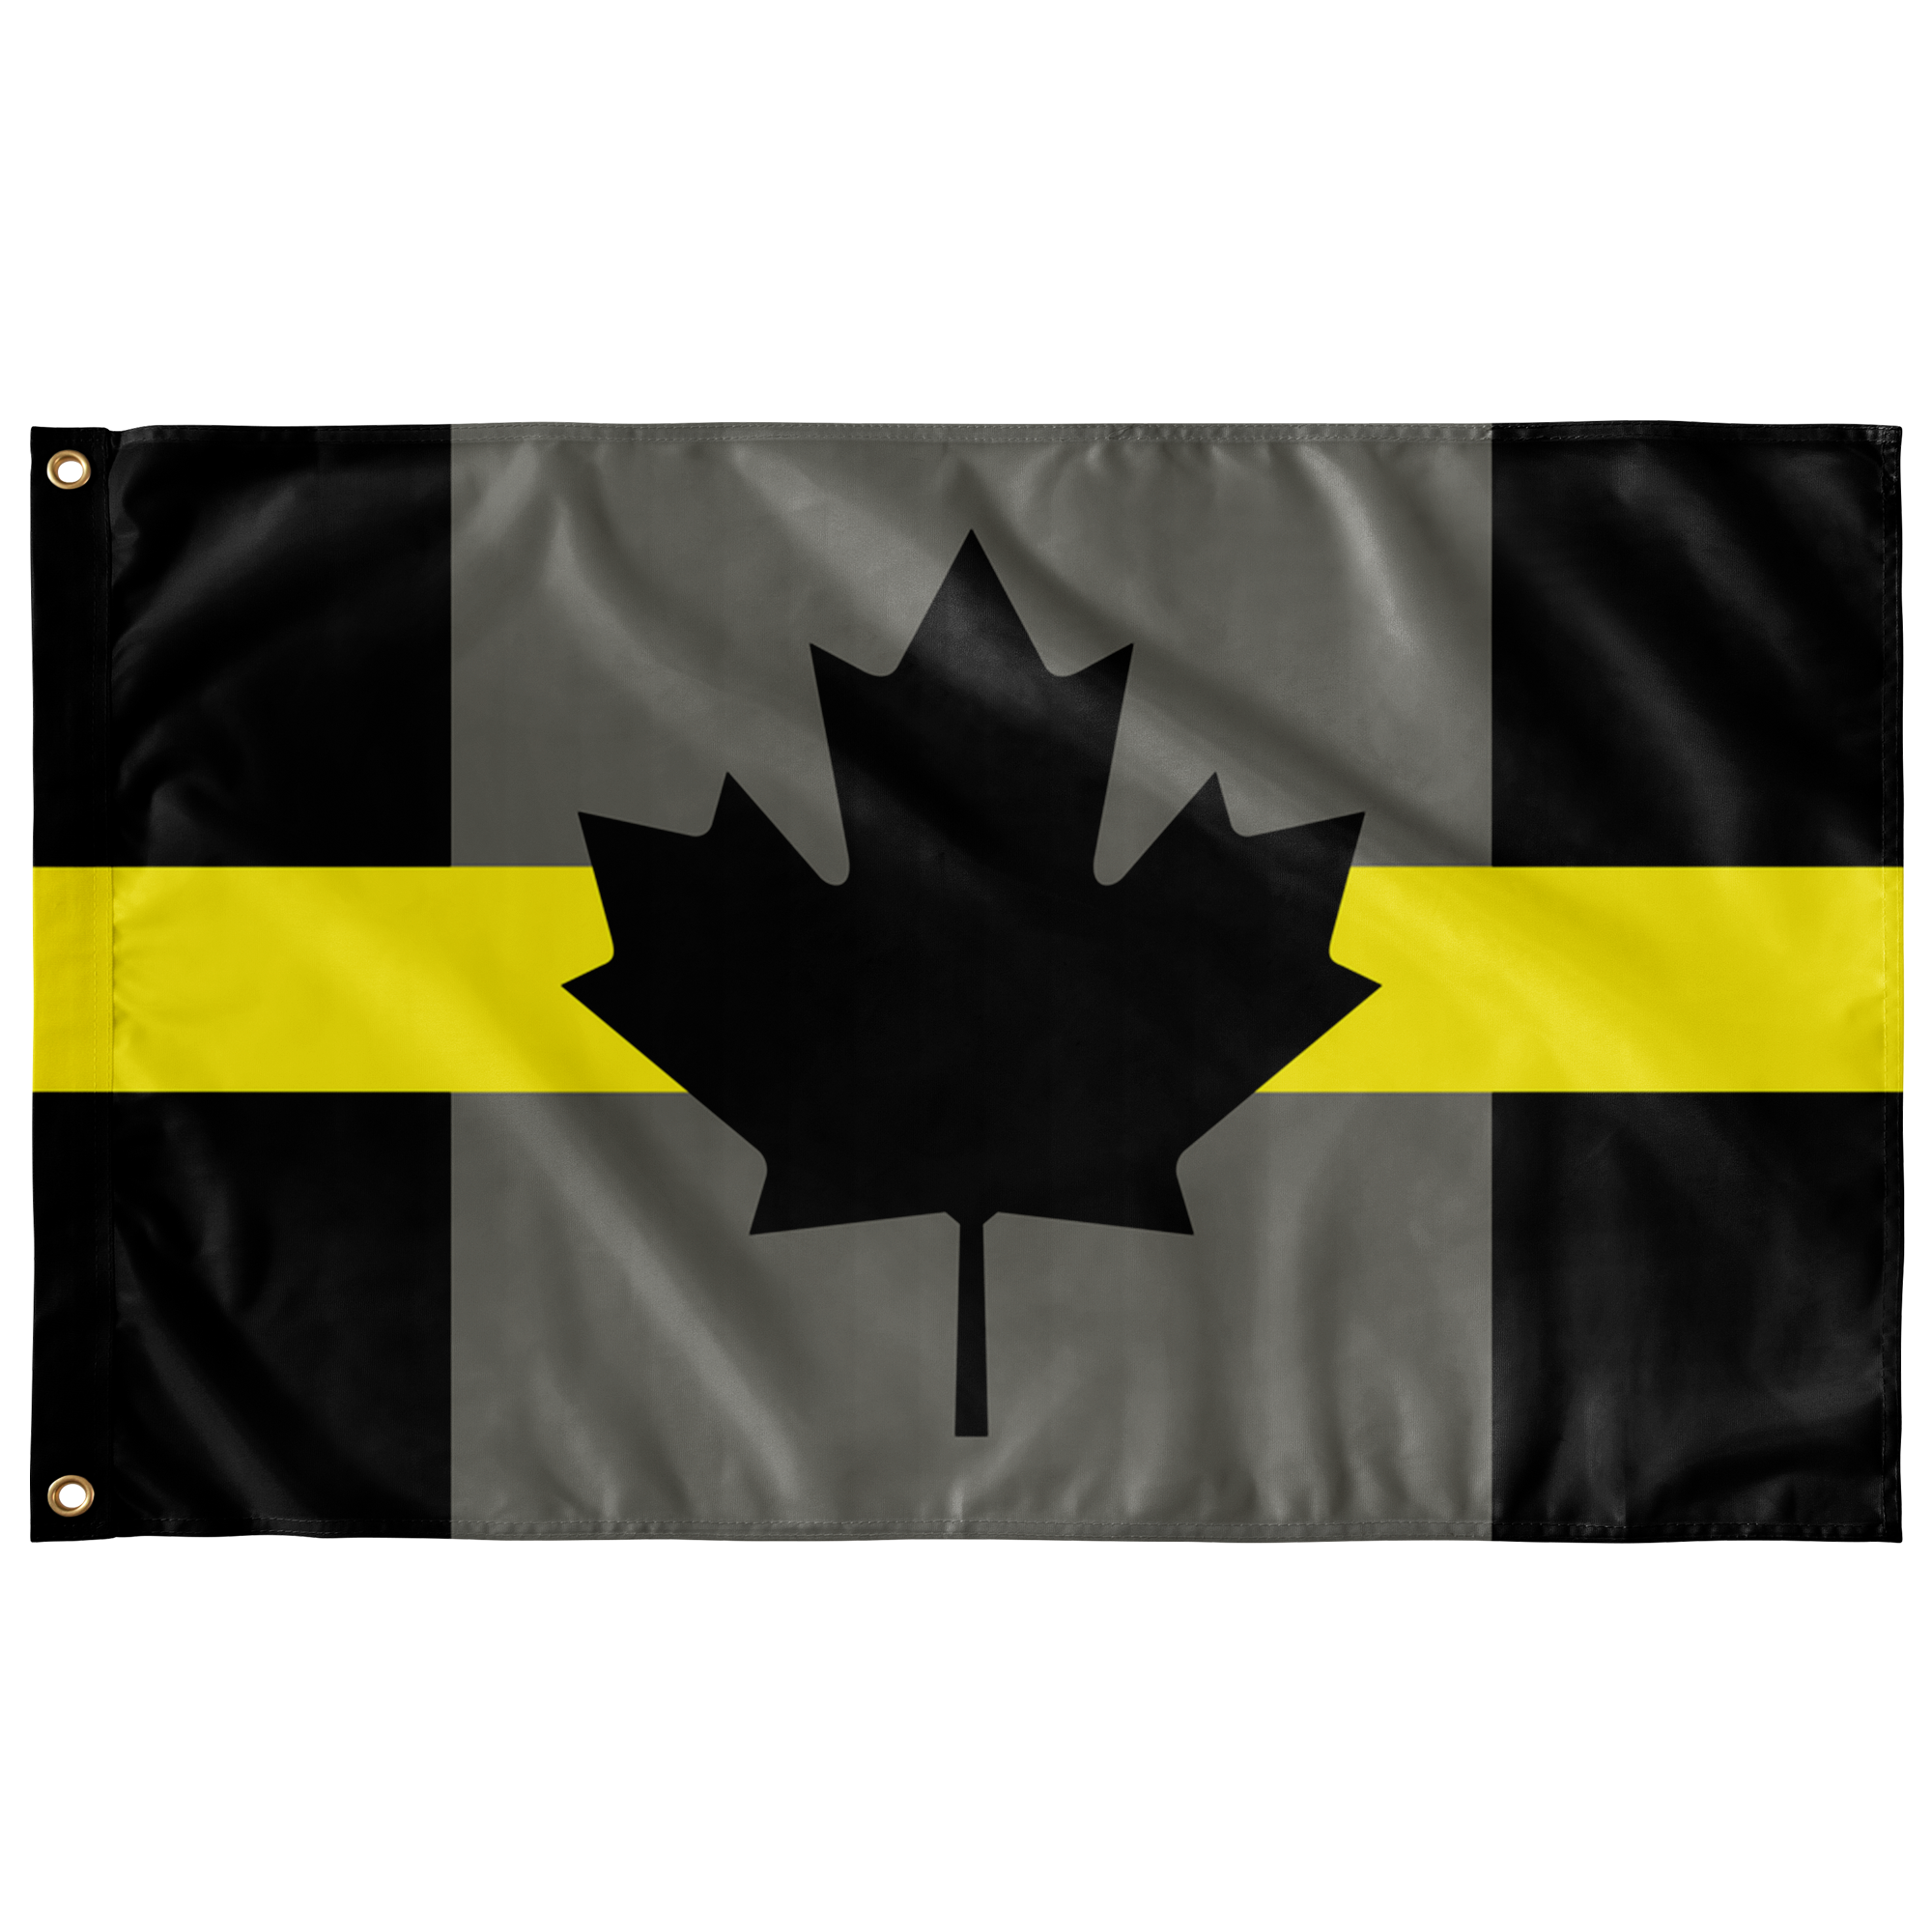 Thin Yellow Line Canada Flag